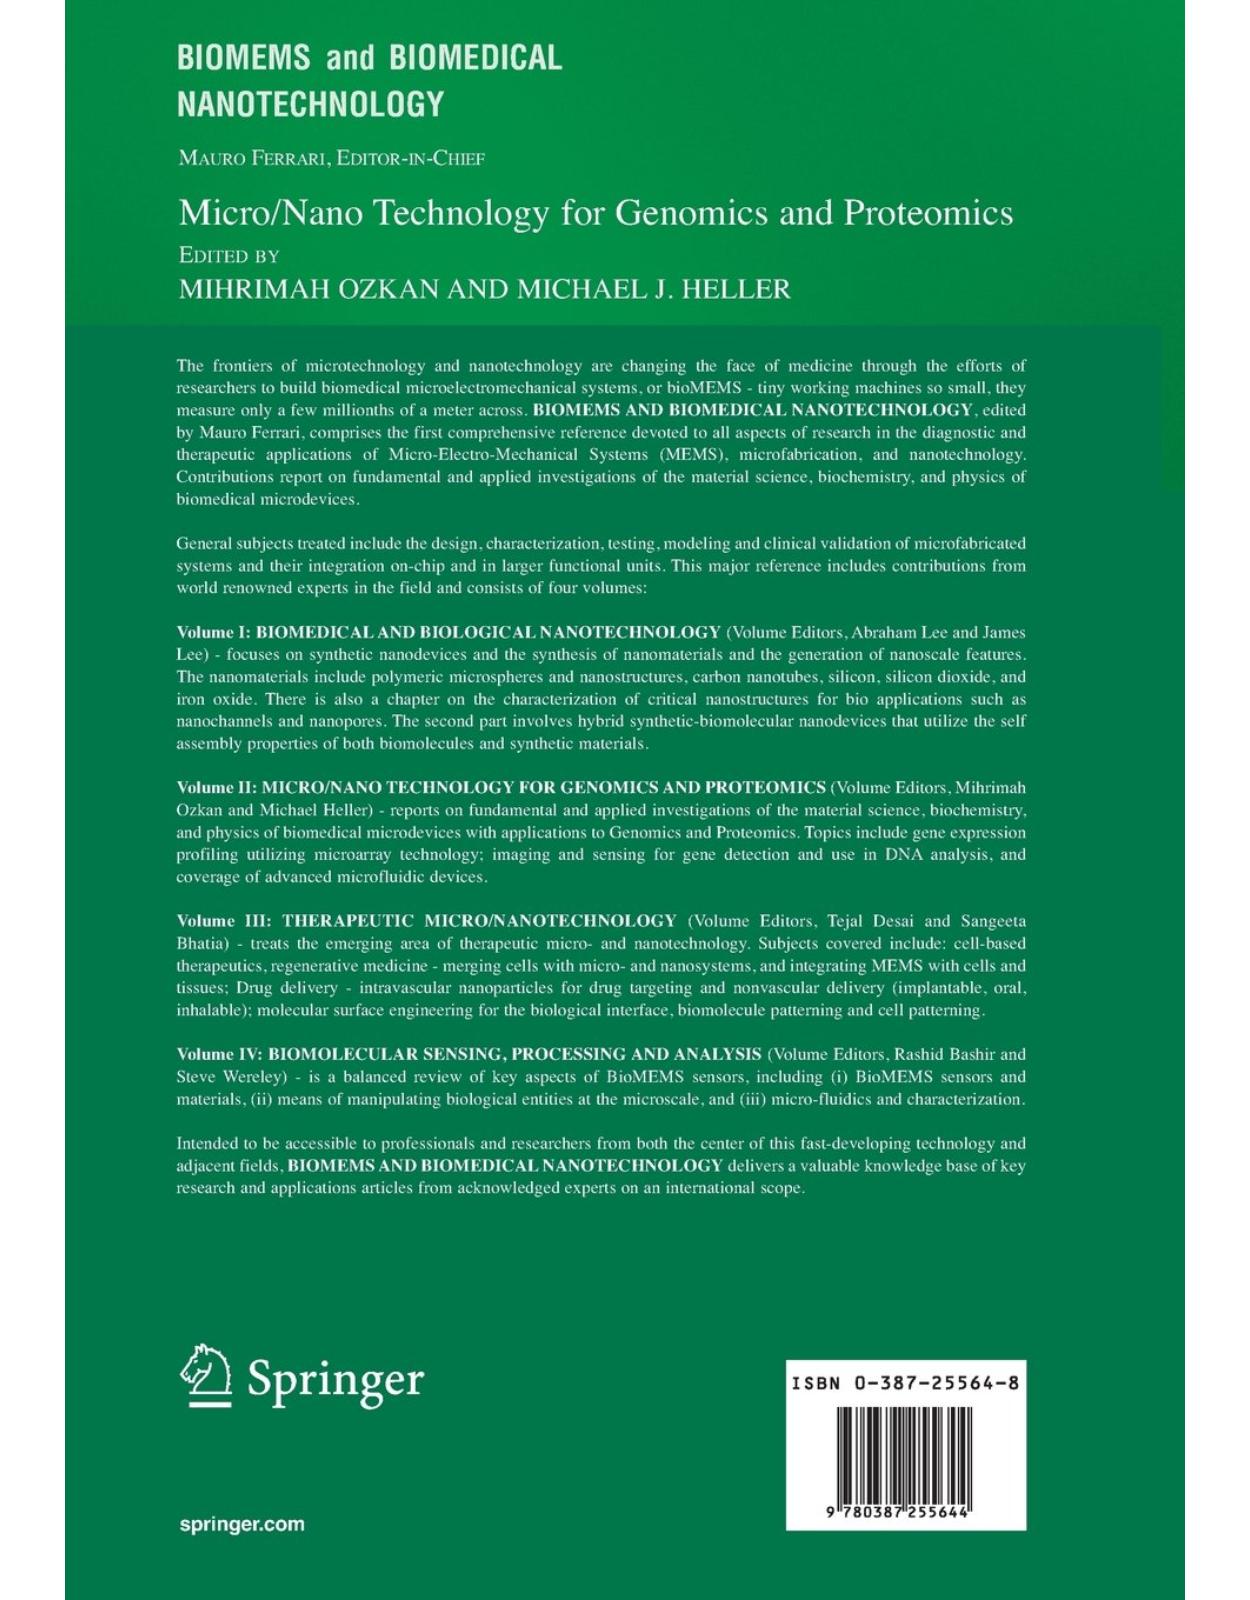 Micro/Nano Technologies for Genomics and Proteomics: Micro-and-nano-technologies for Genomics and Proteomics v. 2 (Biomems and Biomedical Nanotechnology)